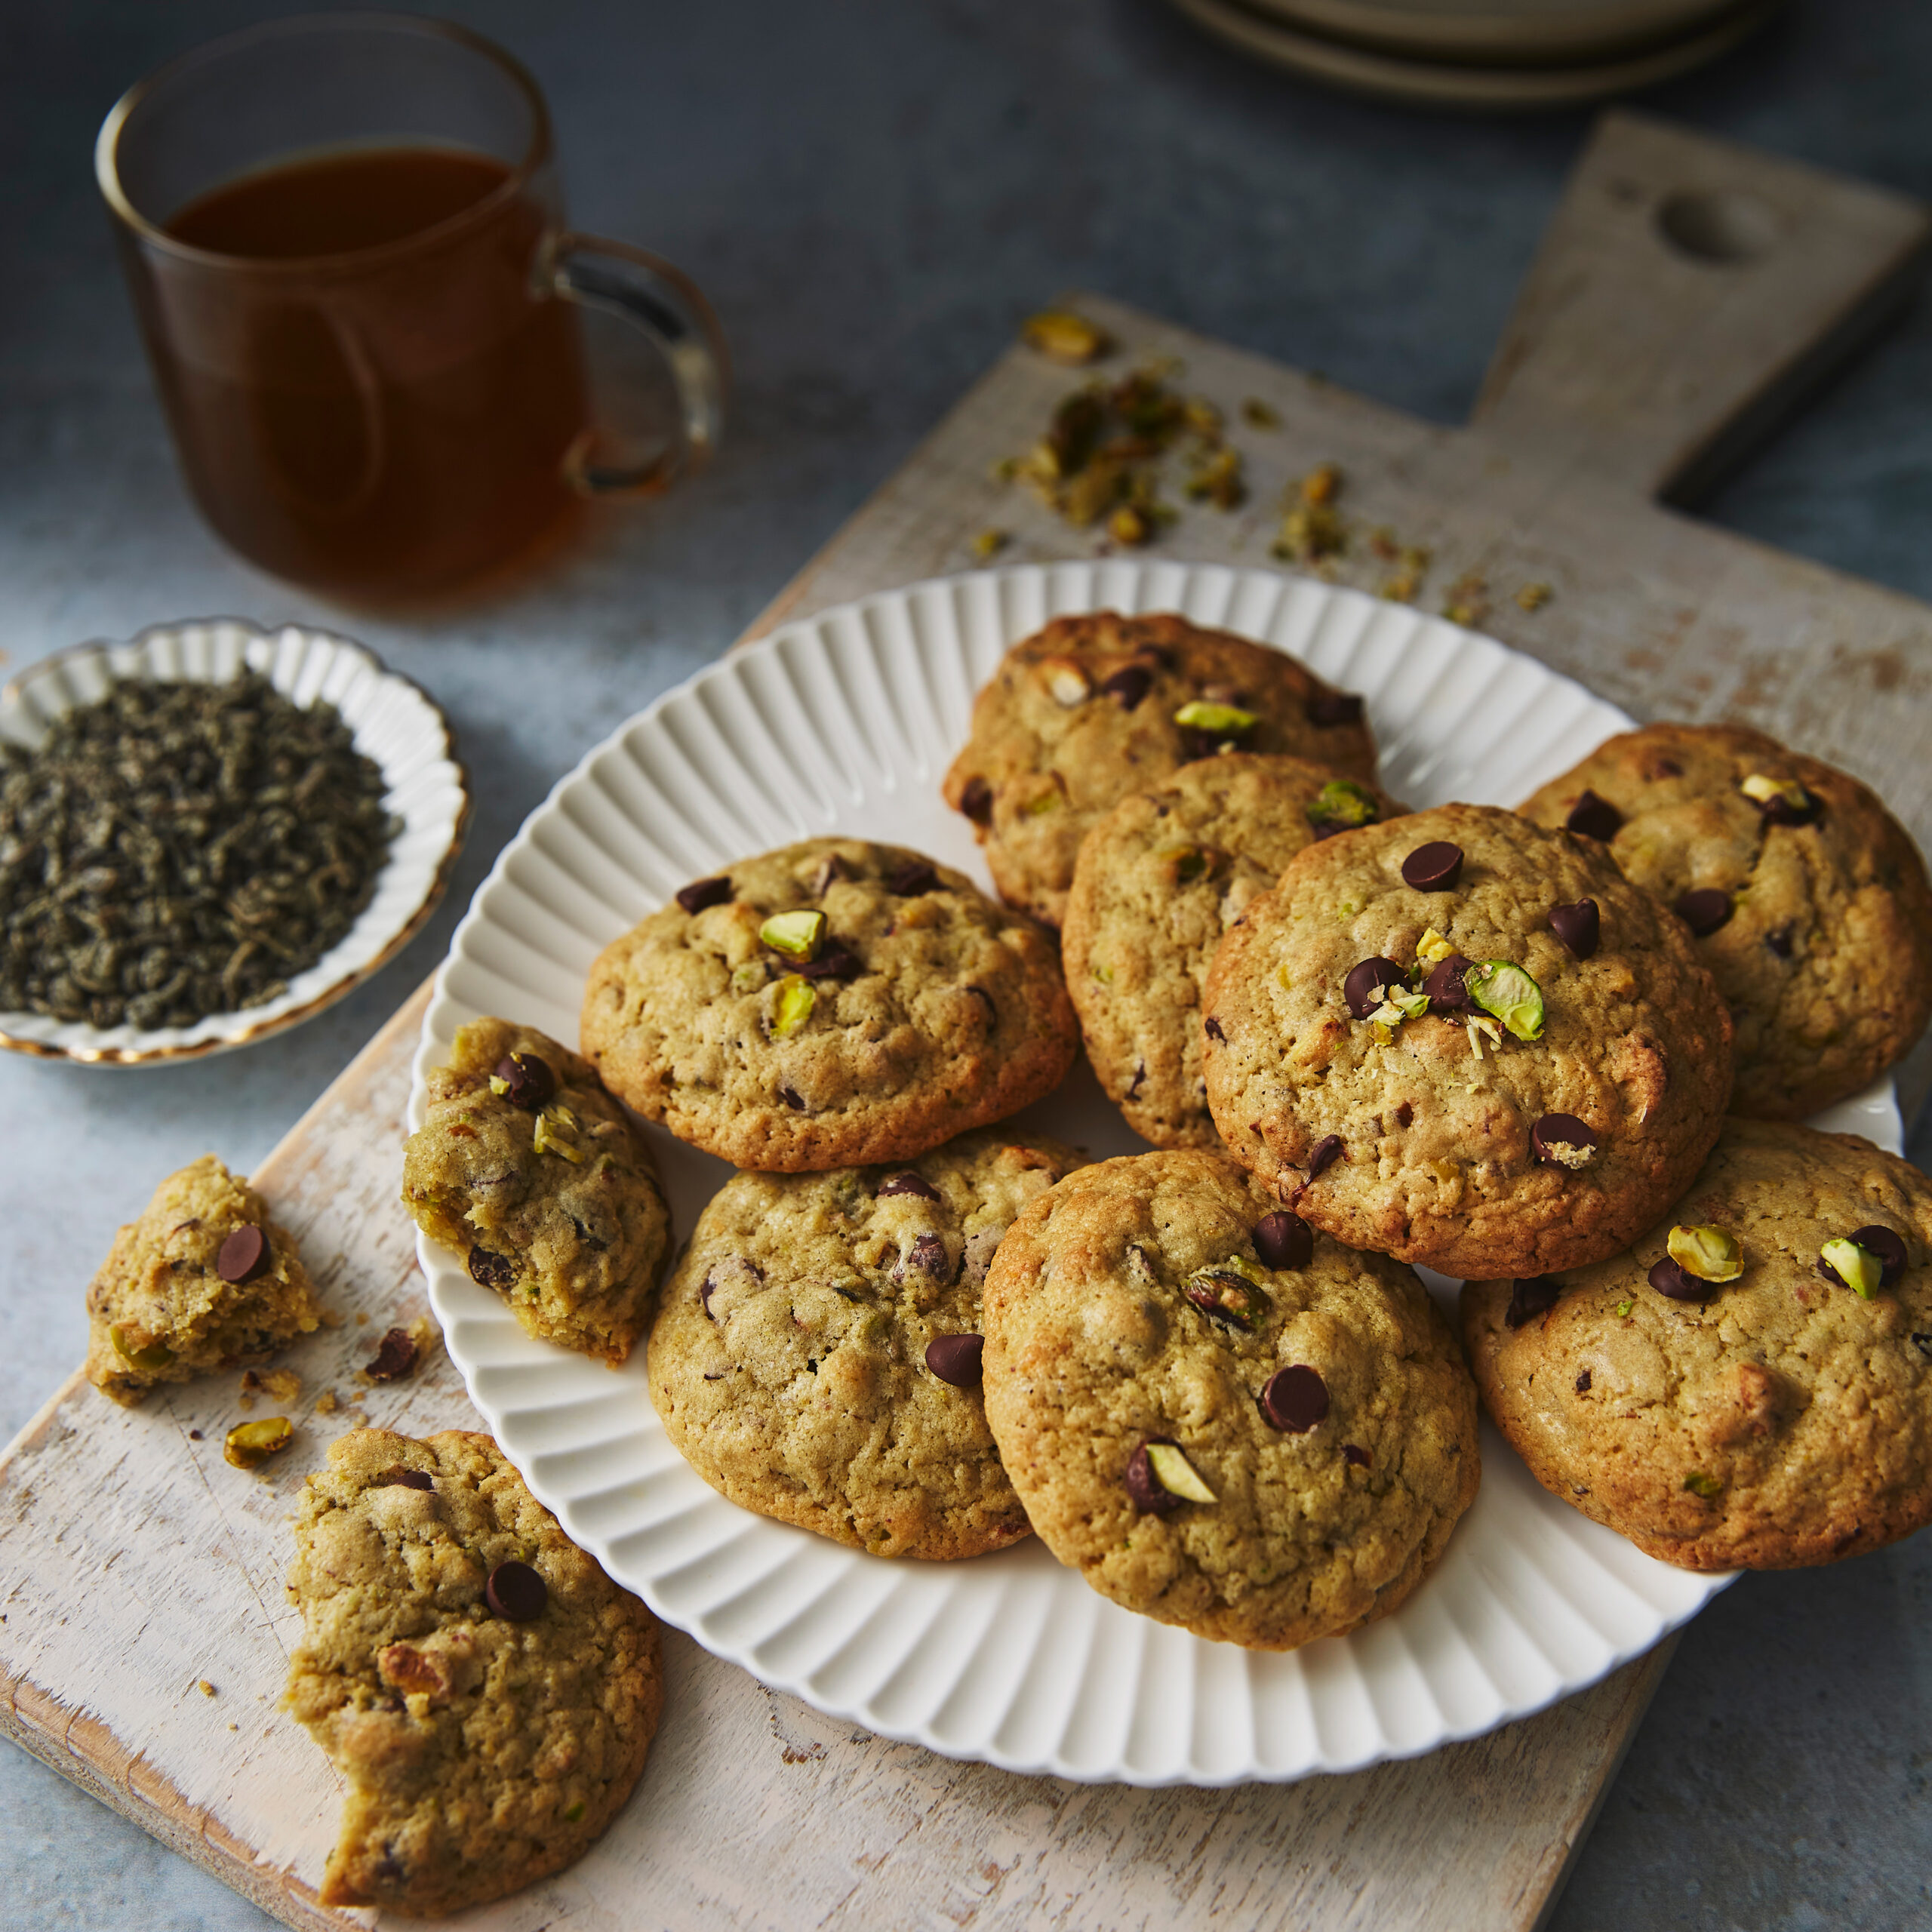 Green Tea, Pistachio and Dark Chocolate Cookies Recipe